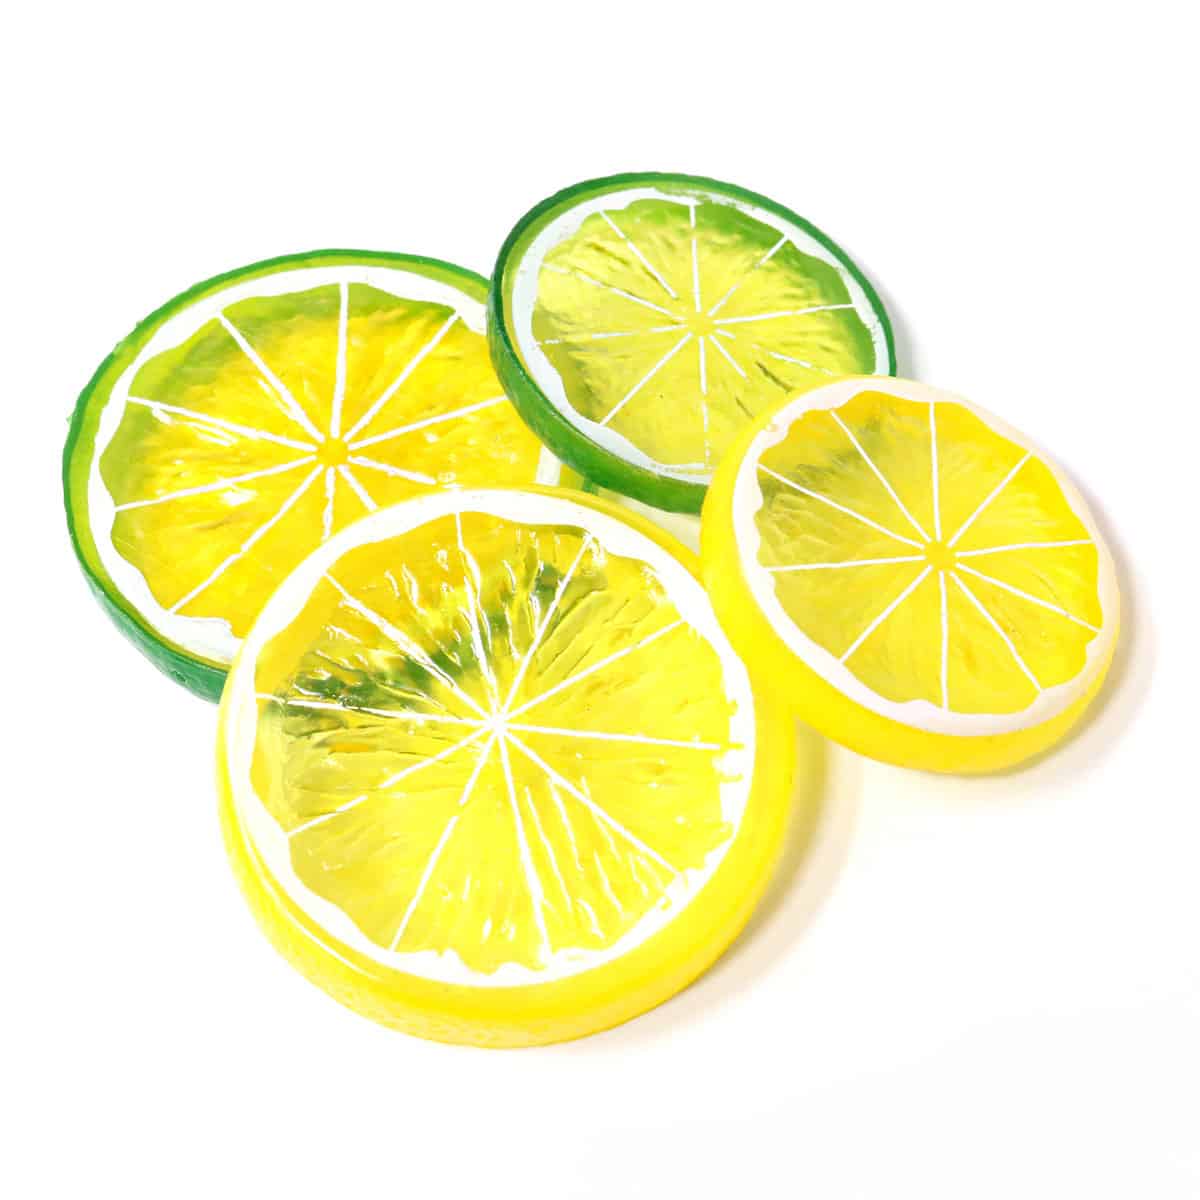 Lemon and lime epoxy sprinkles